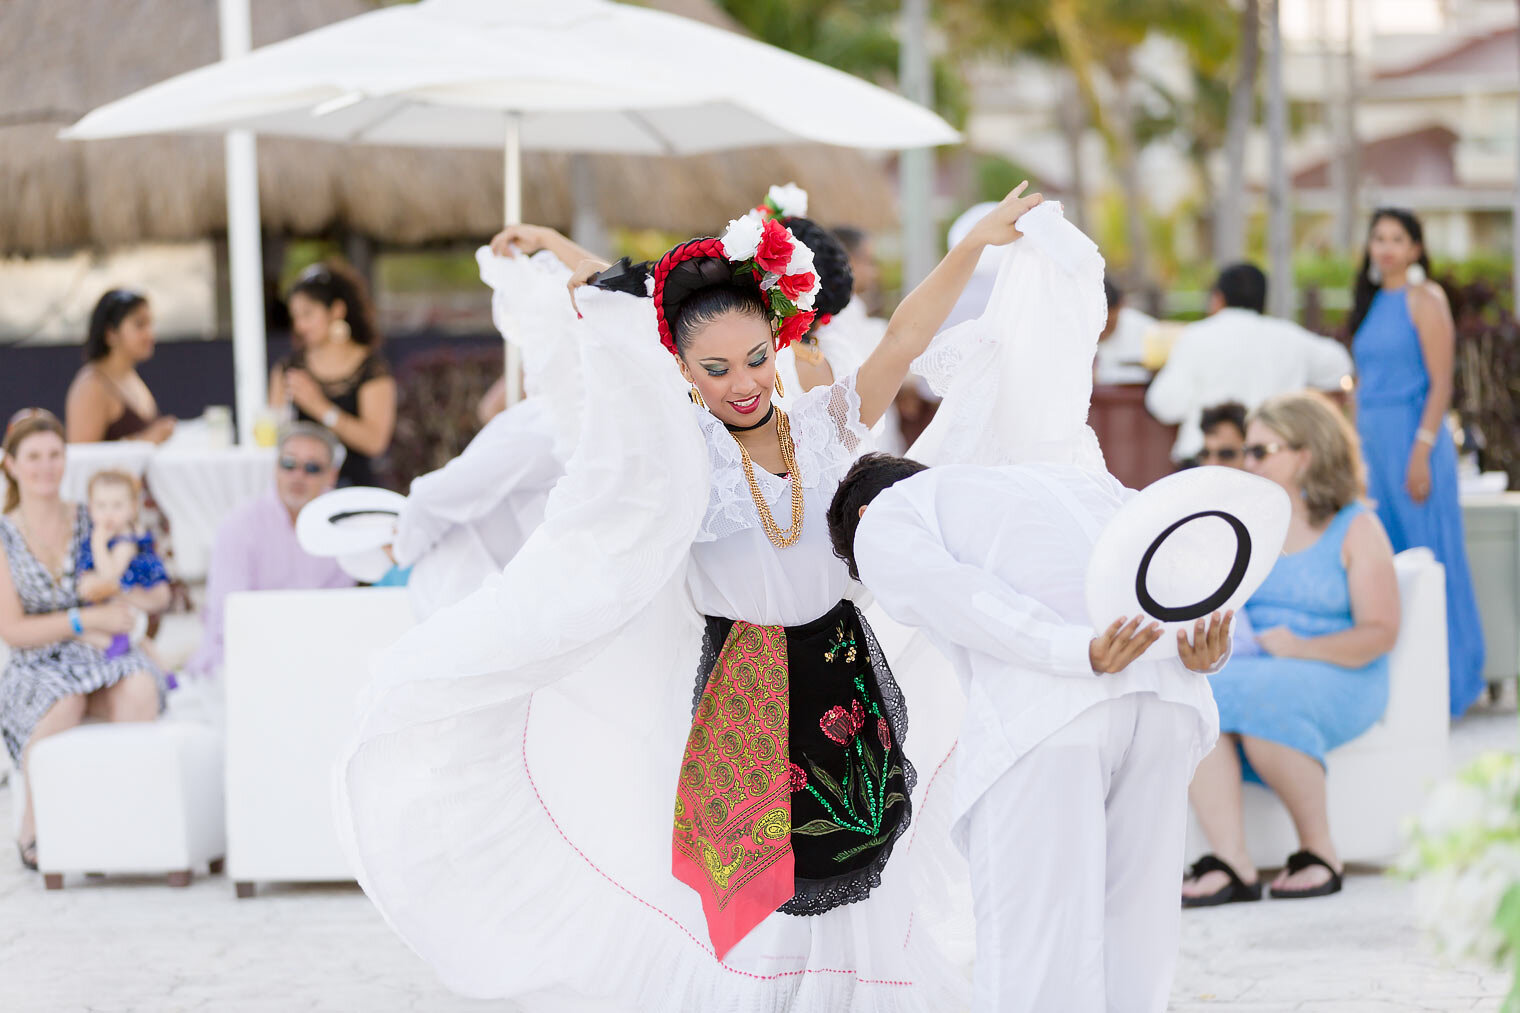 131-Cancun-South-Asian-wedding-photography-mehndi-moon-palace-resort-Mexico.jpg